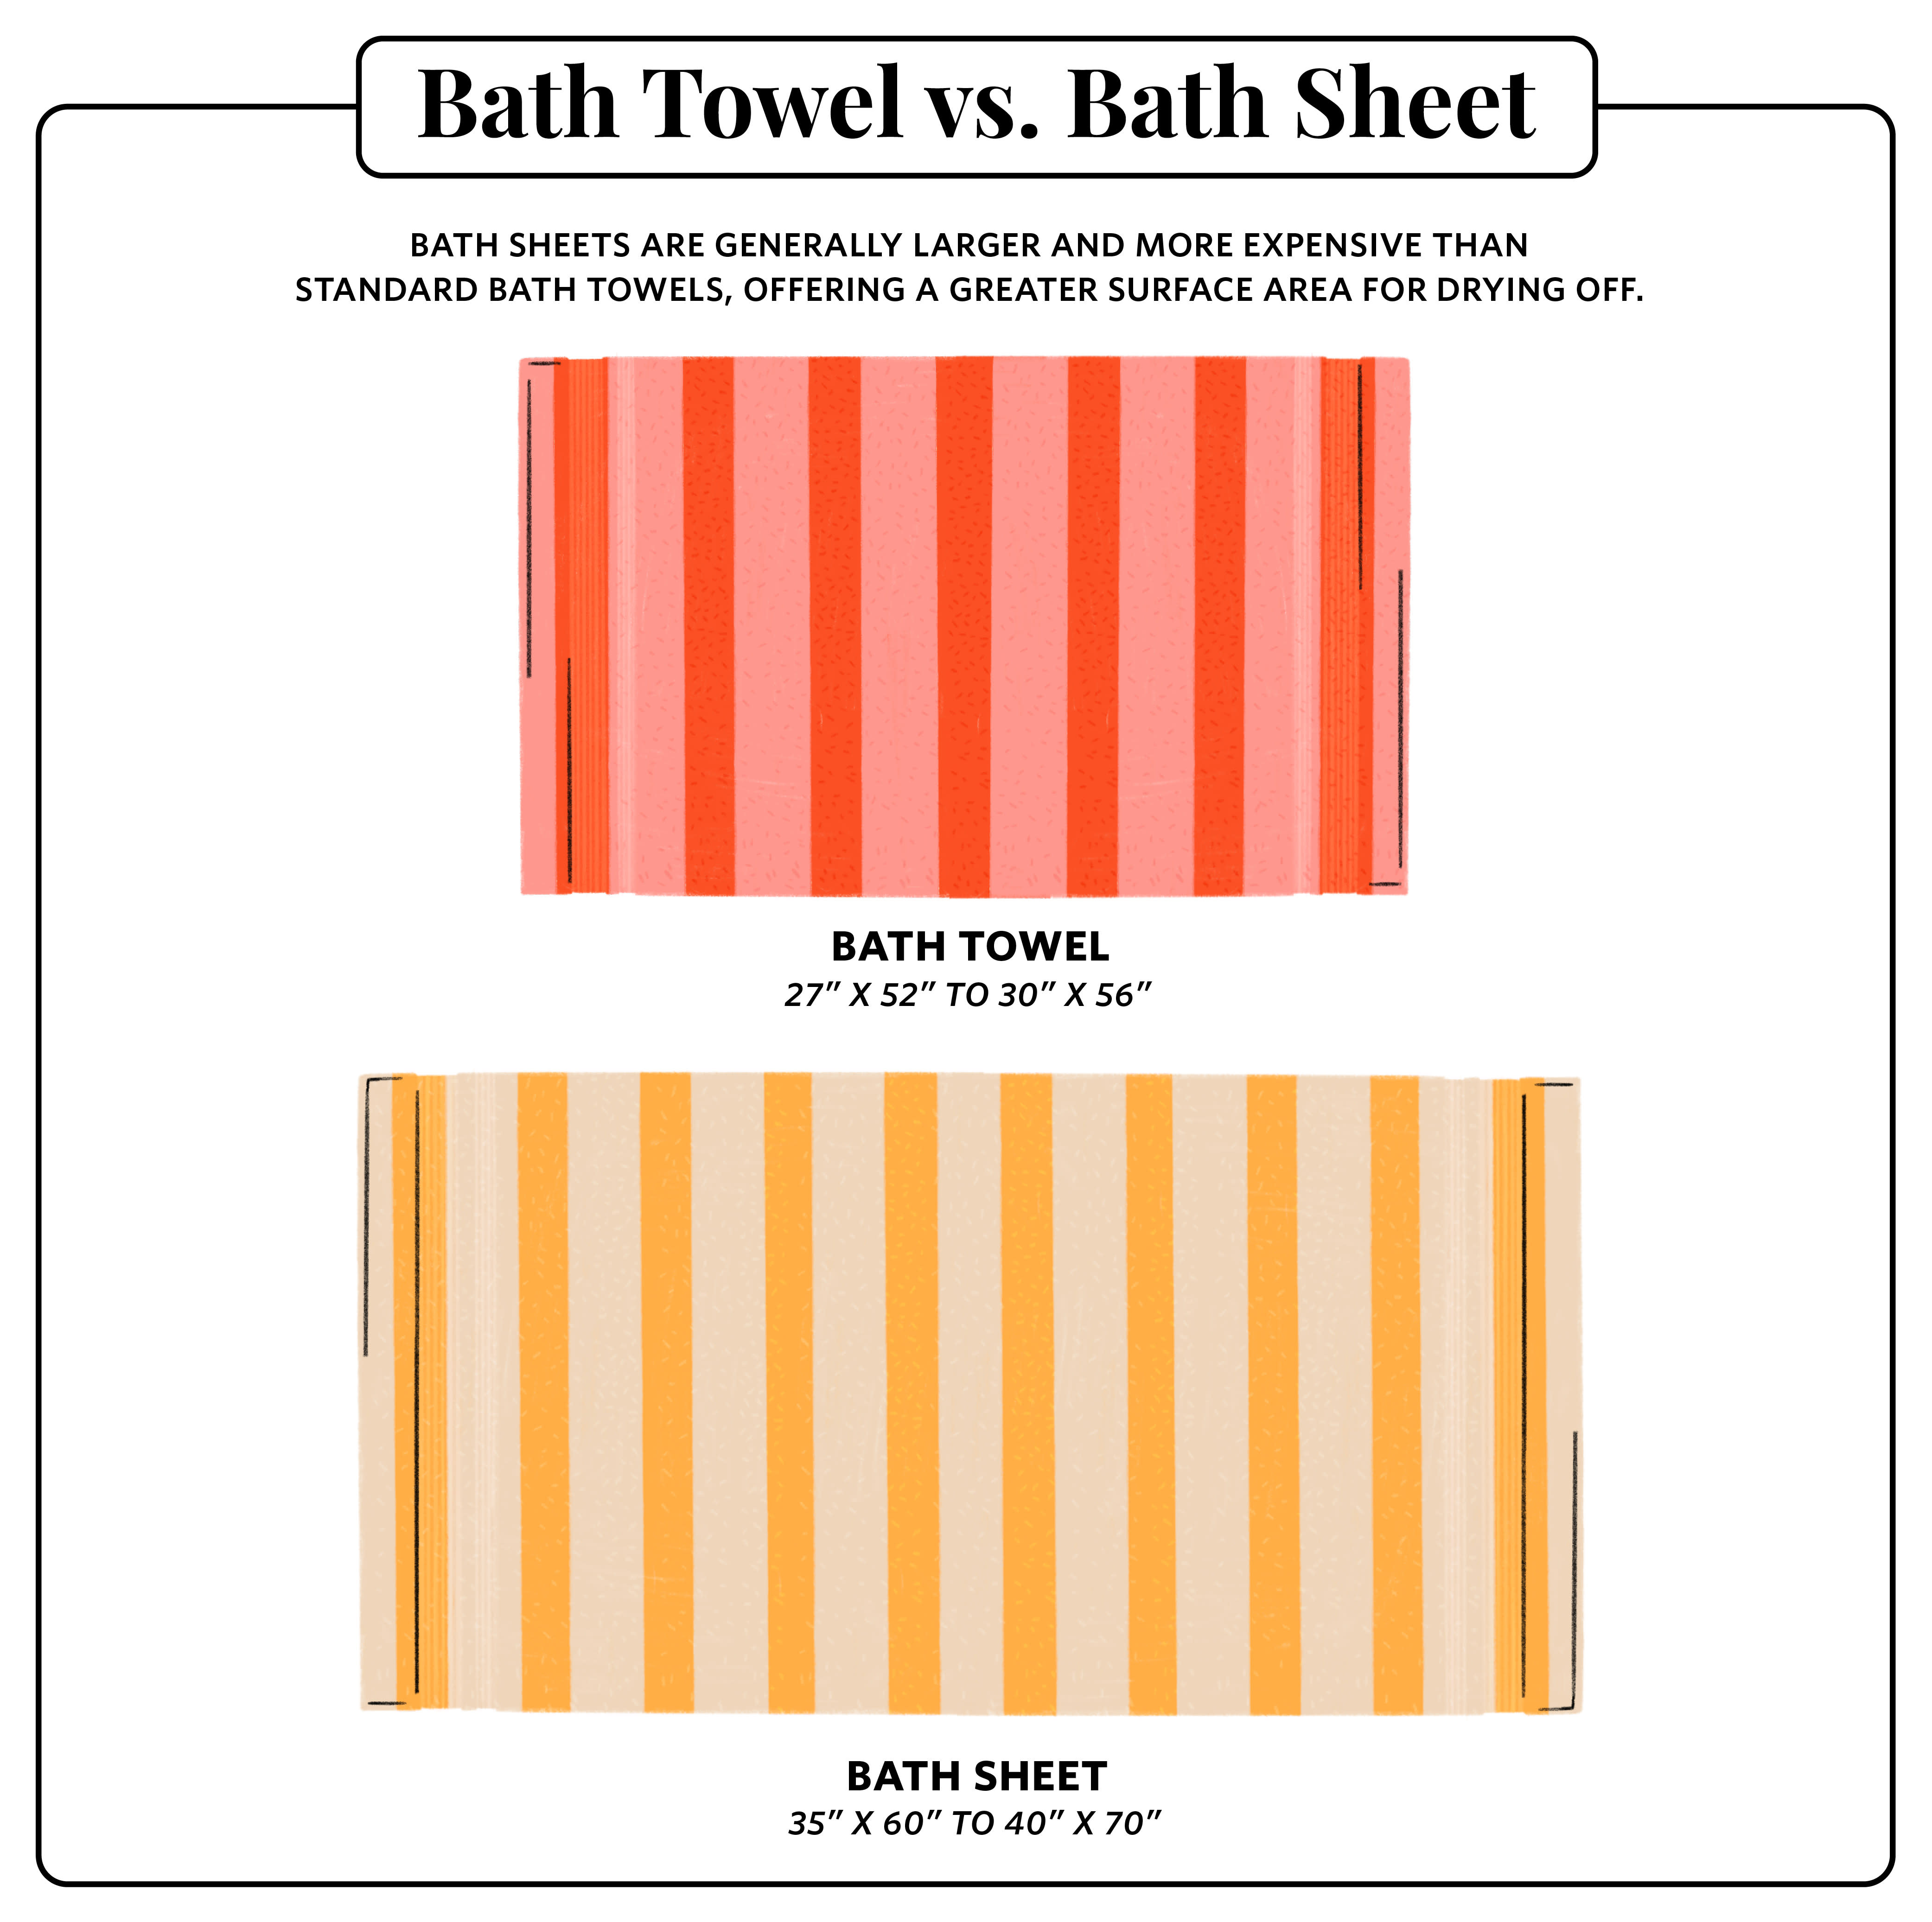 https://cdn.apartmenttherapy.info/image/upload/v1610731793/at/art/design/2021-01/towel-buying-guide/Towel-Buying-Guide-bathtowelvsbathsheet.jpg